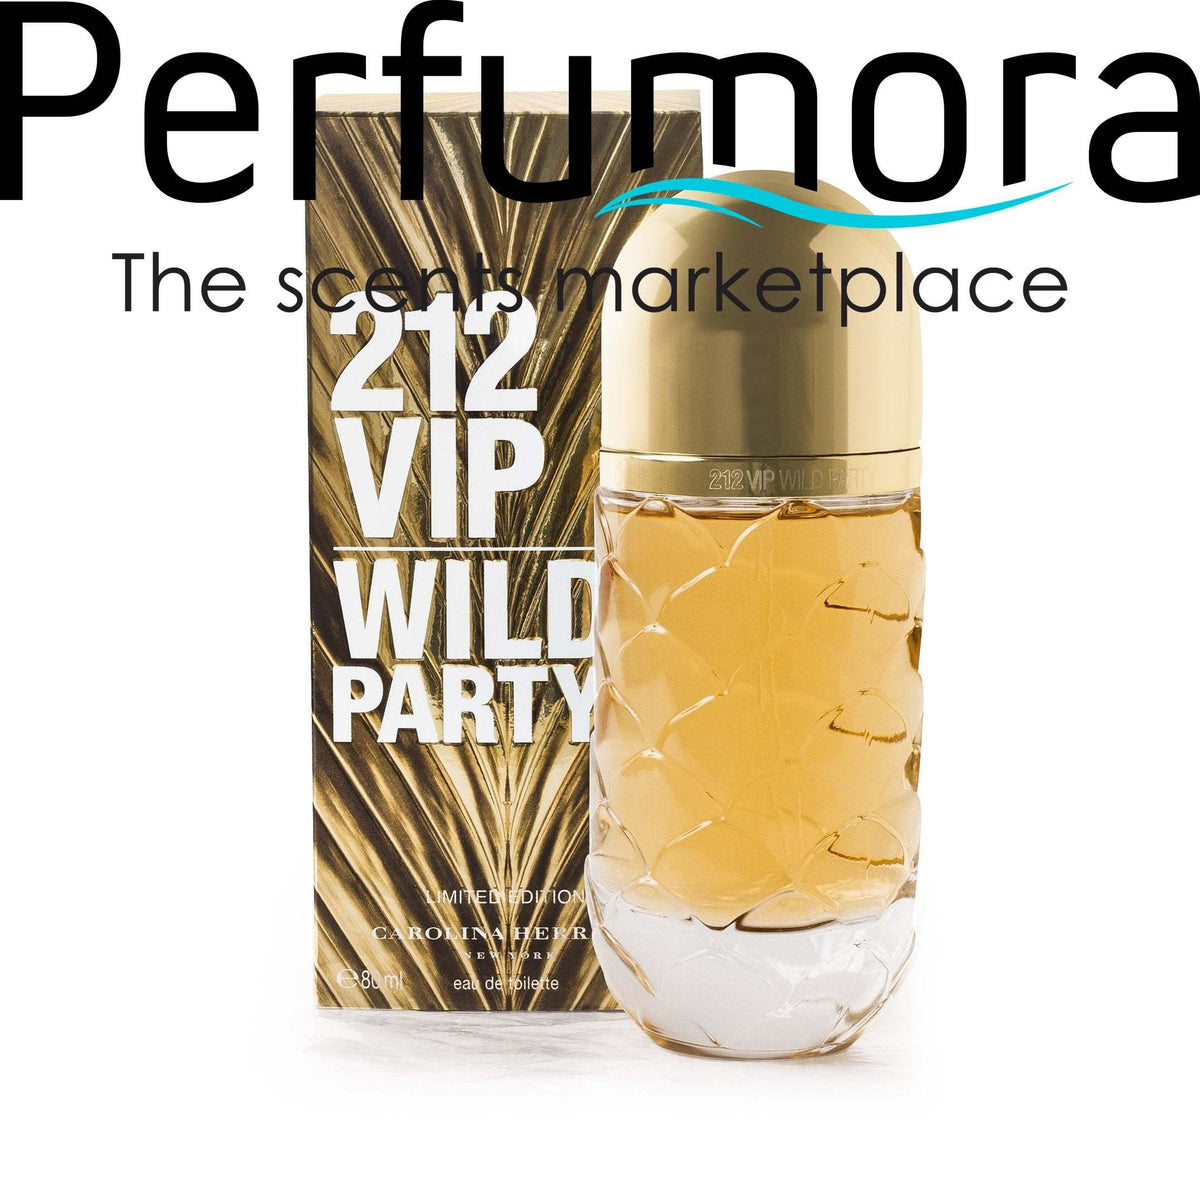 212 VIP Wild Party Eau de Toilette Spray for Women by Carolina Herrera